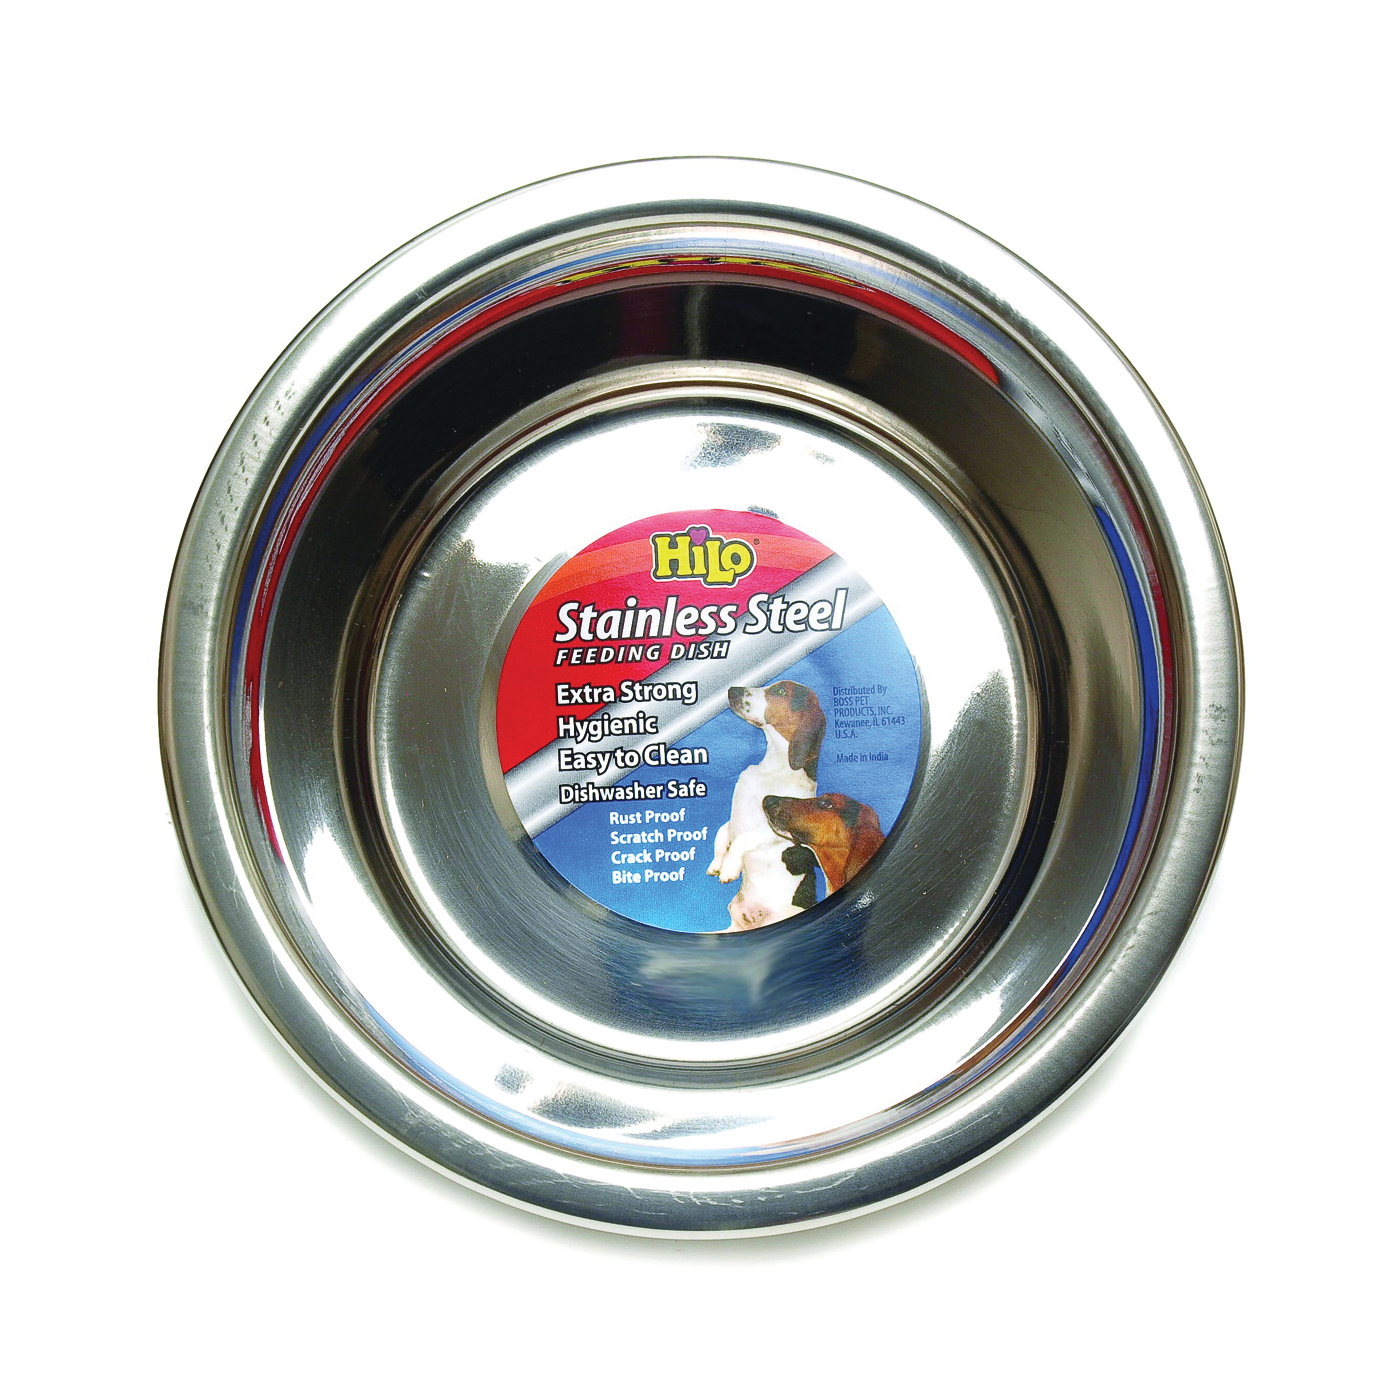 56630 Pet Feeding Dish, L, 3 qt Volume, Stainless Steel